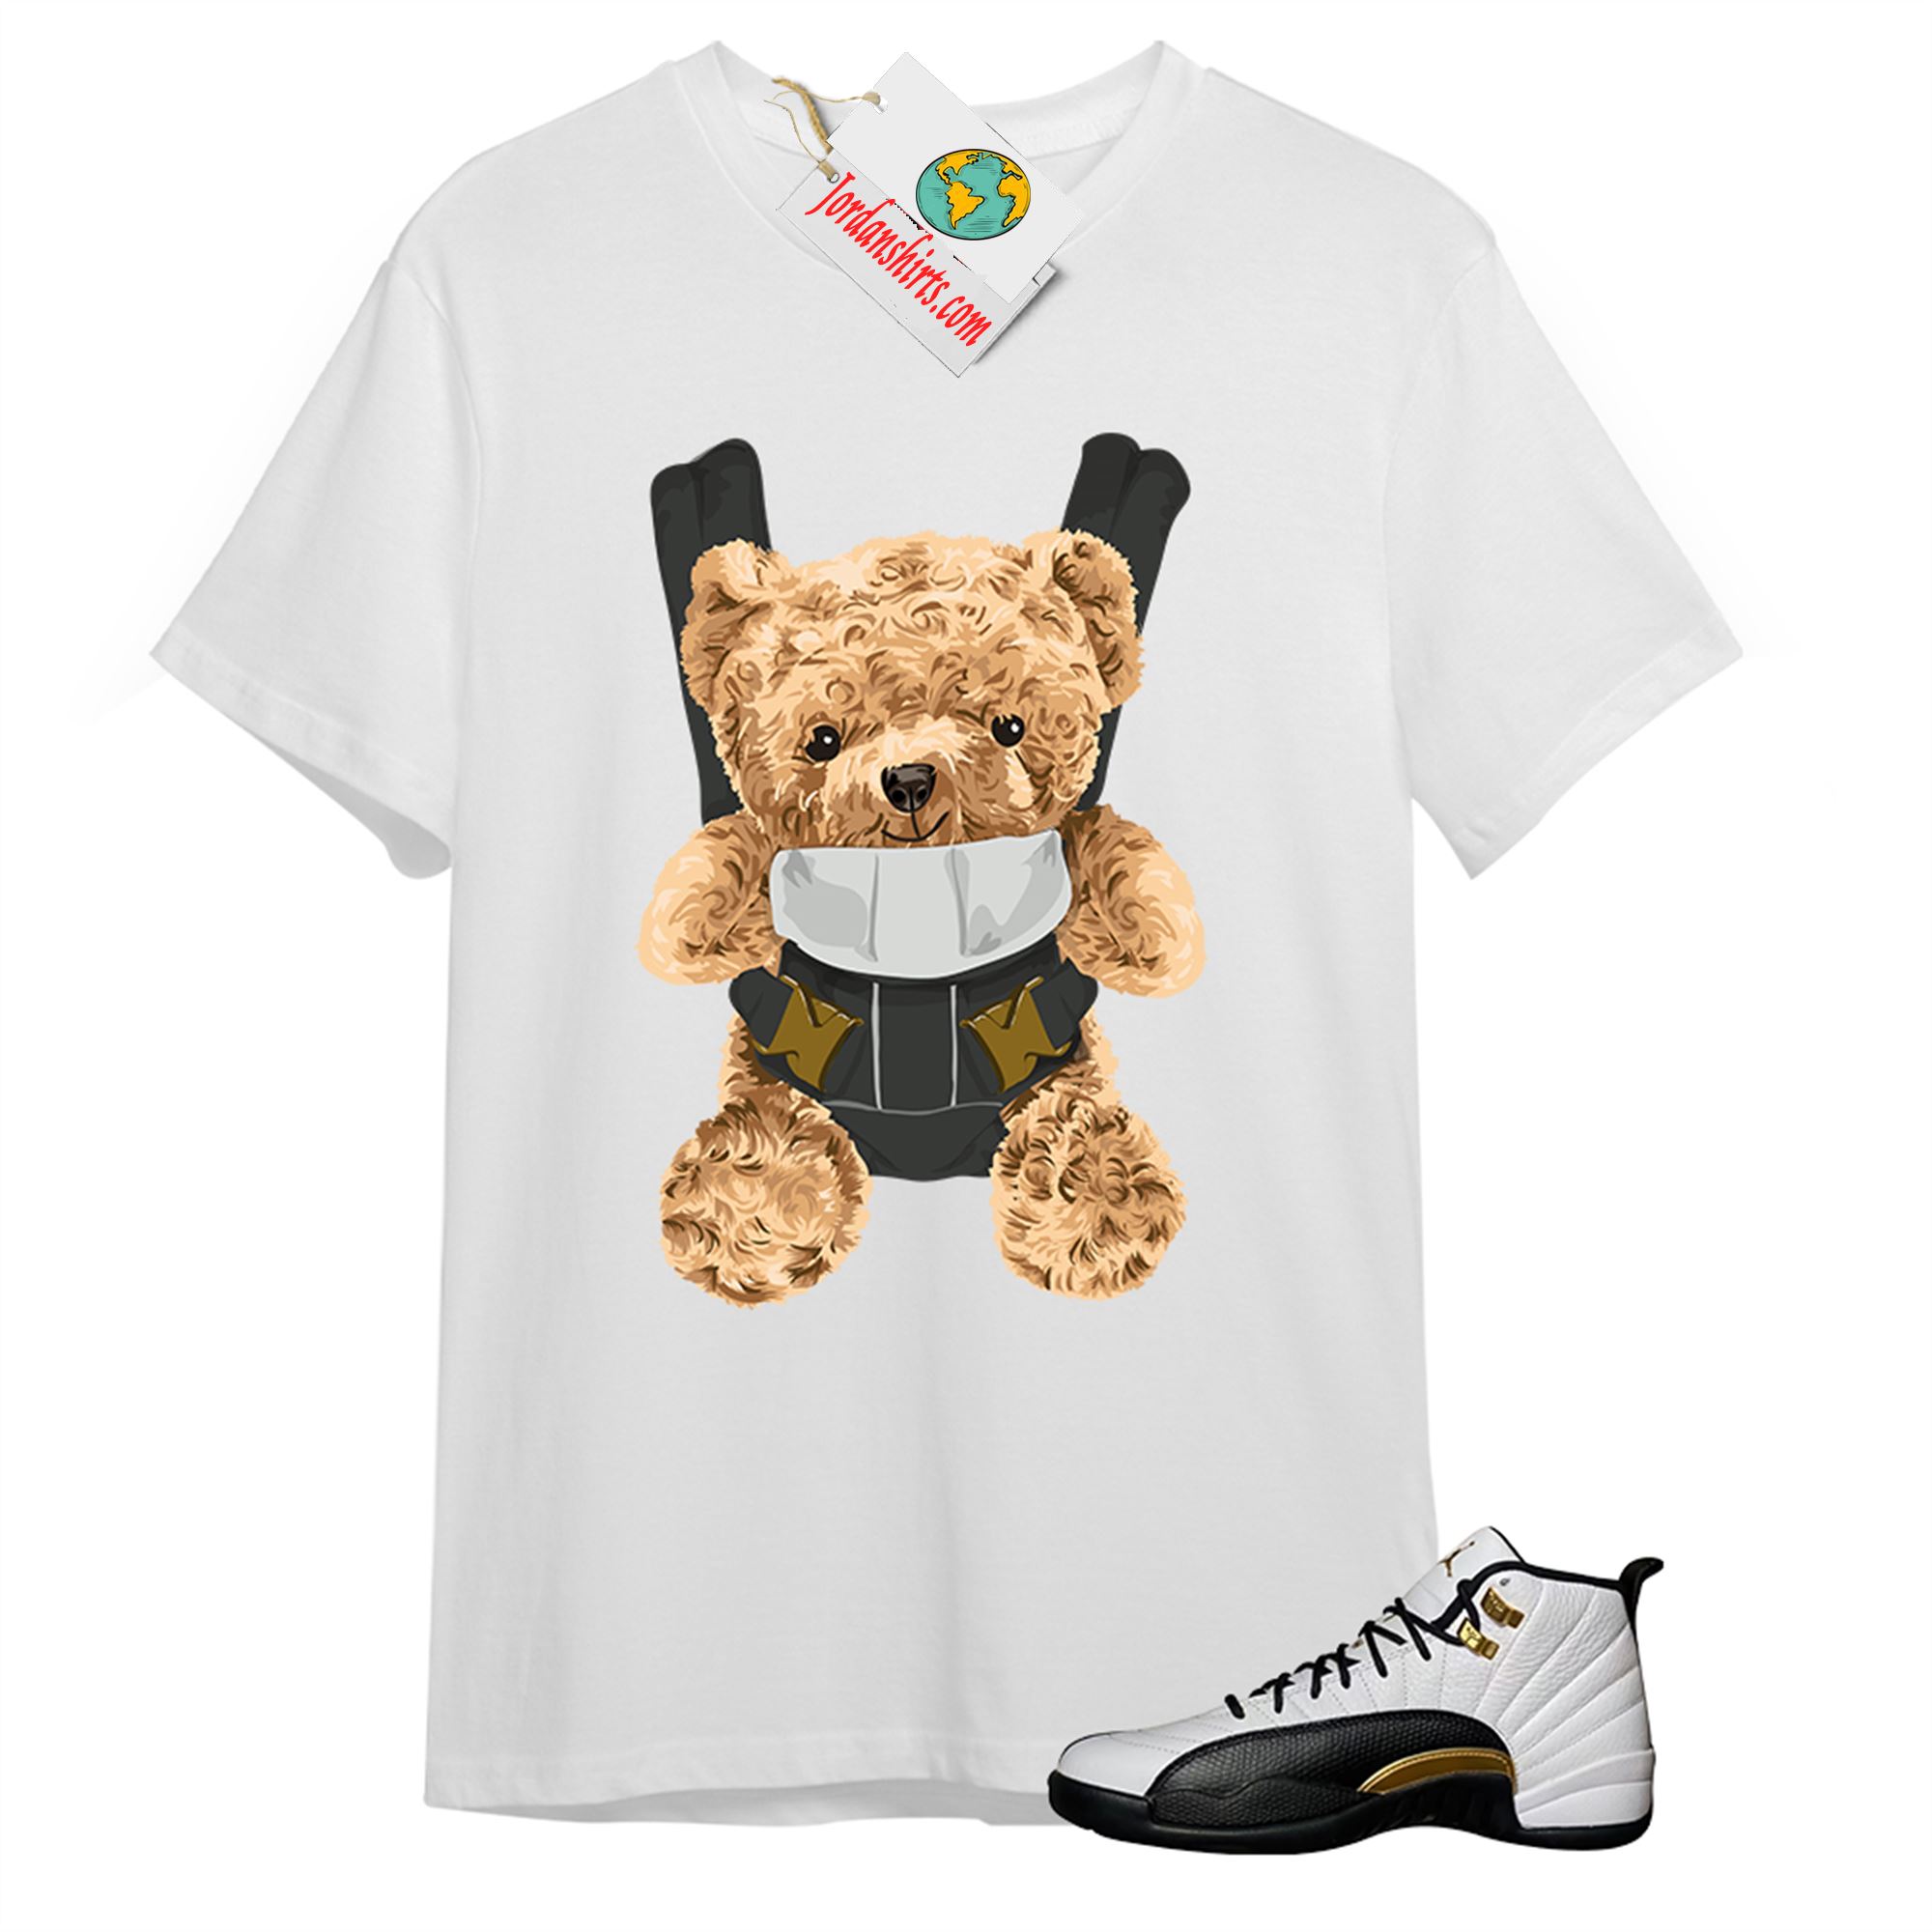 Jordan 12 Shirt, Teddy Bear Bag White T-shirt Air Jordan 12 Royalty 12s Plus Size Up To 5xl